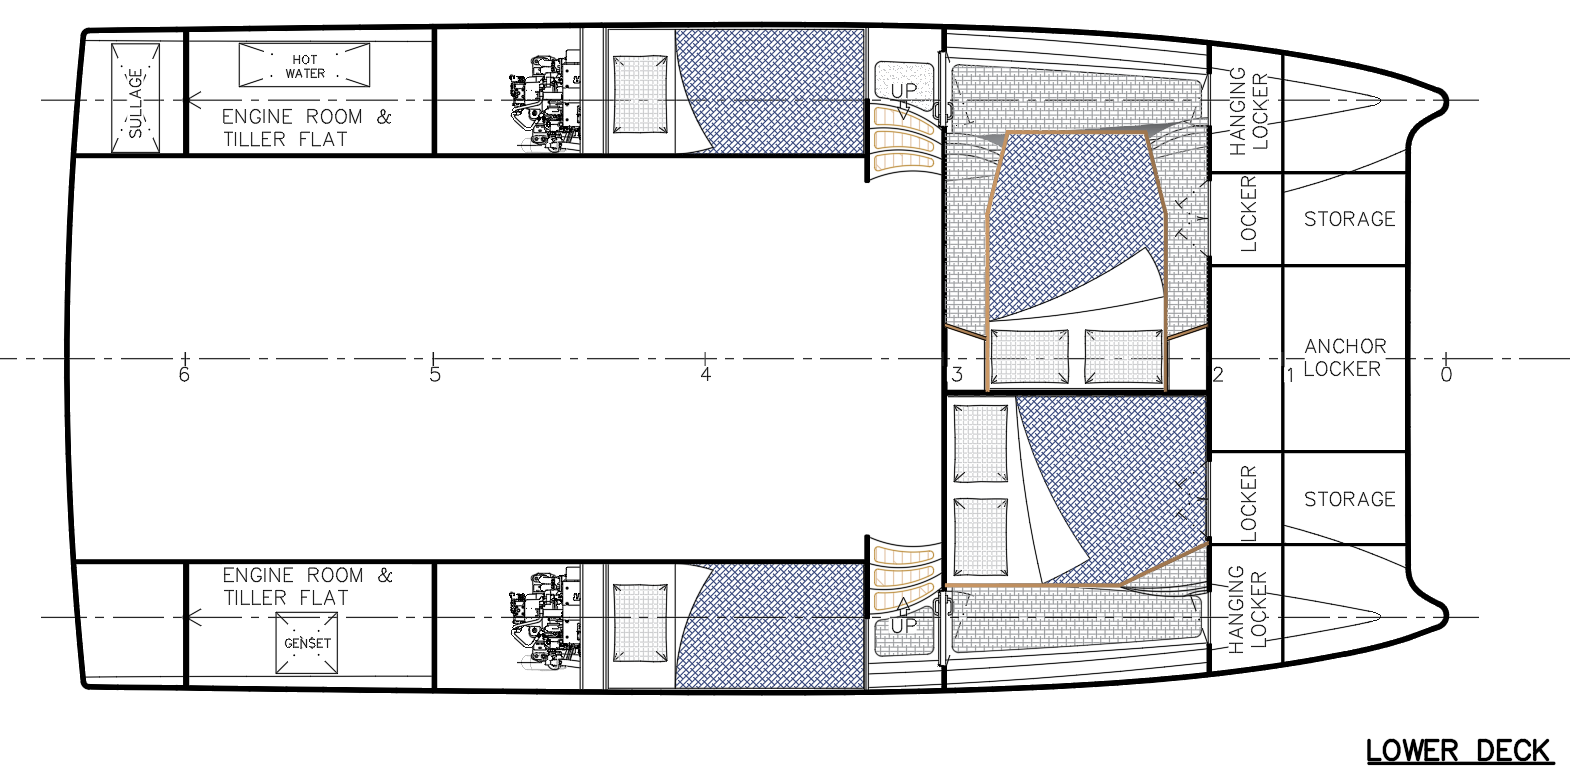 flybridge-lower-deck-layout----------6.png